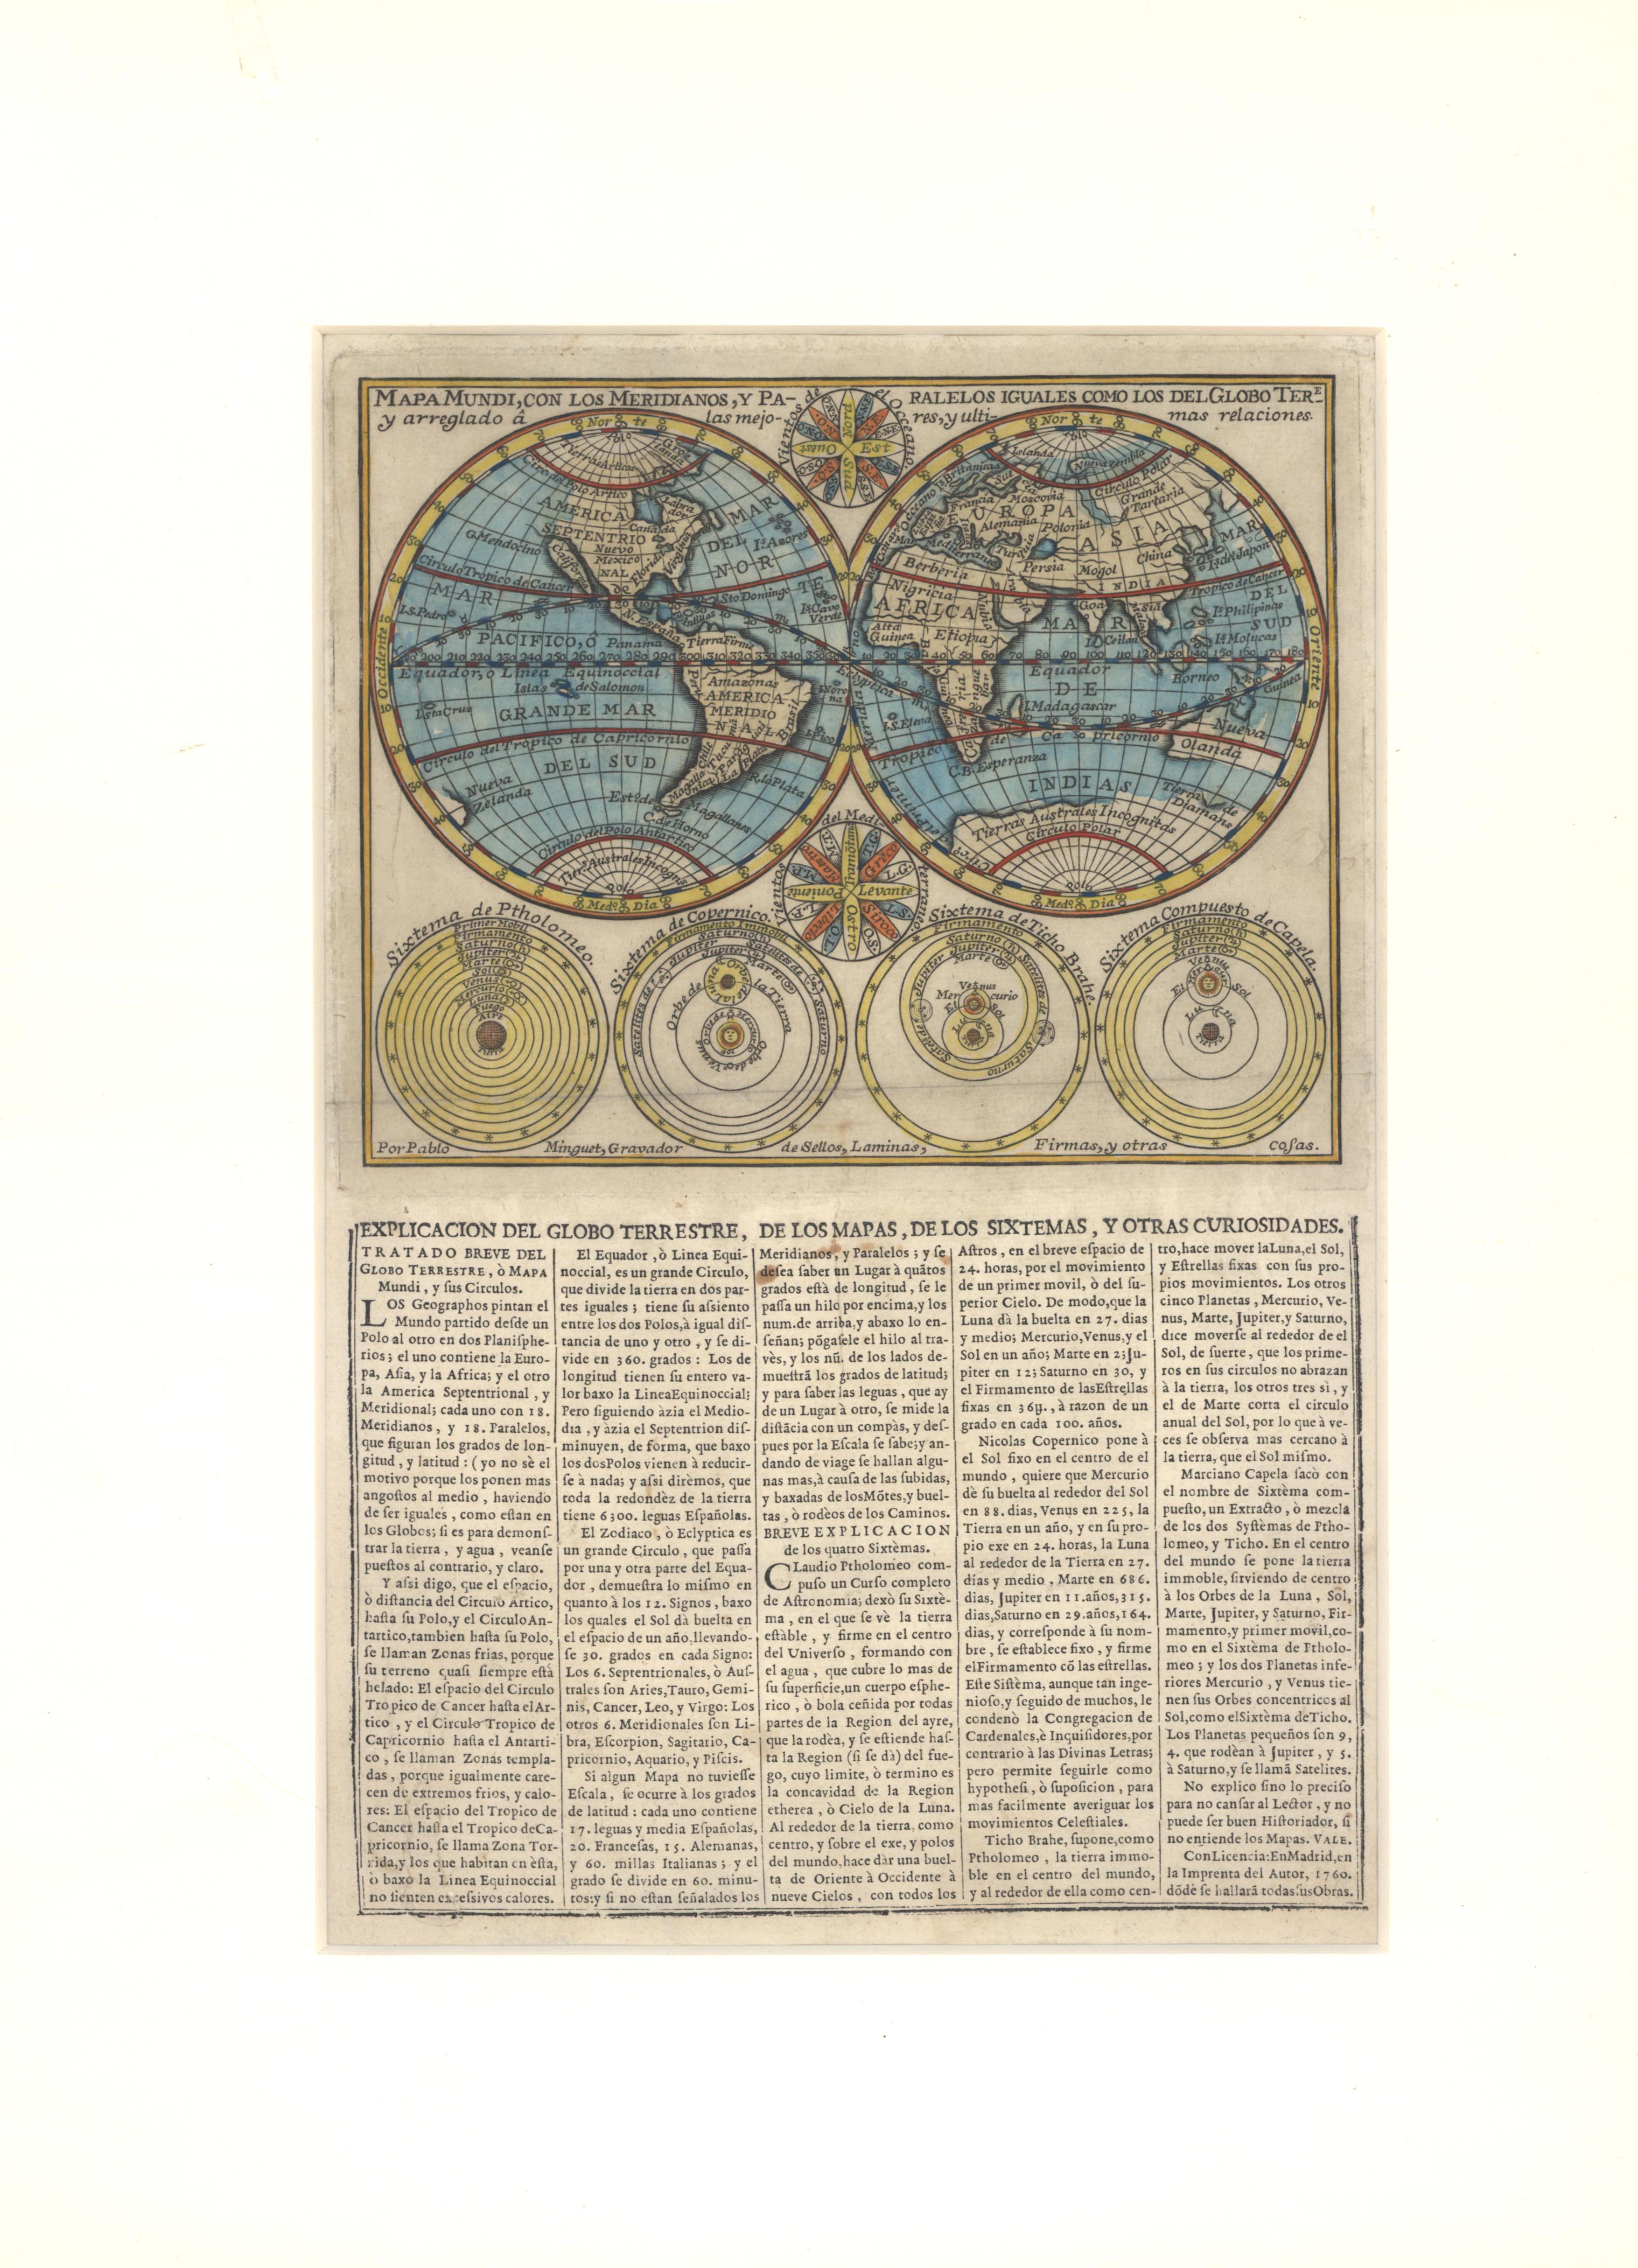 Pablo Minguet Landscape Print - c. 1750 Double-Hemisphere World Map showing California as an Island